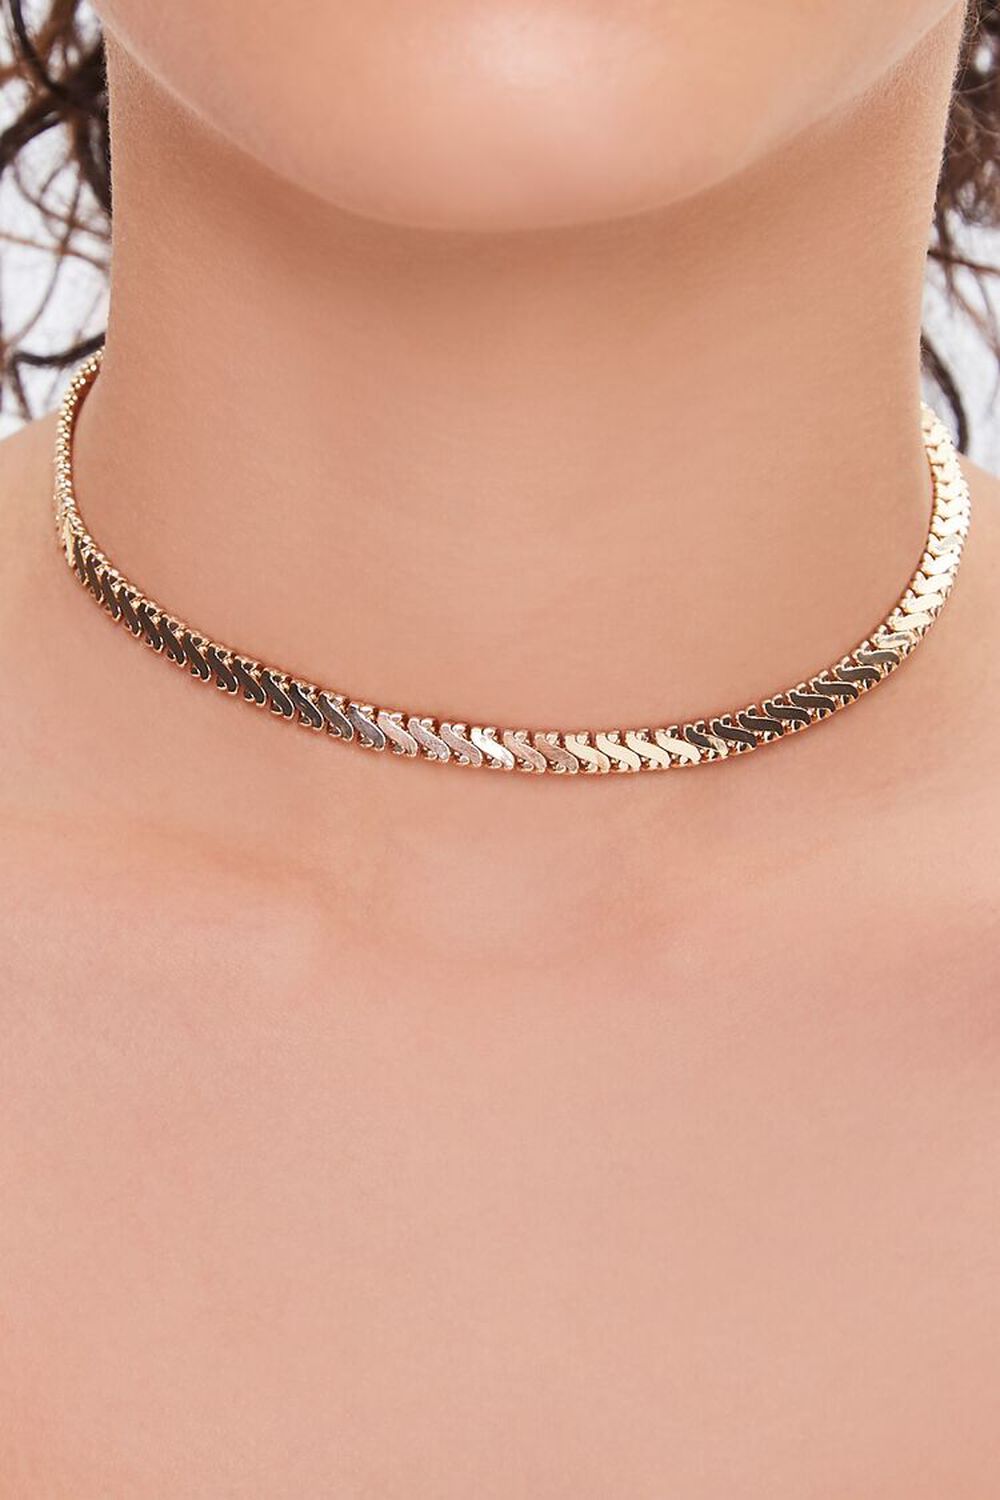 GOLD Herringbone Choker Necklace, image 1